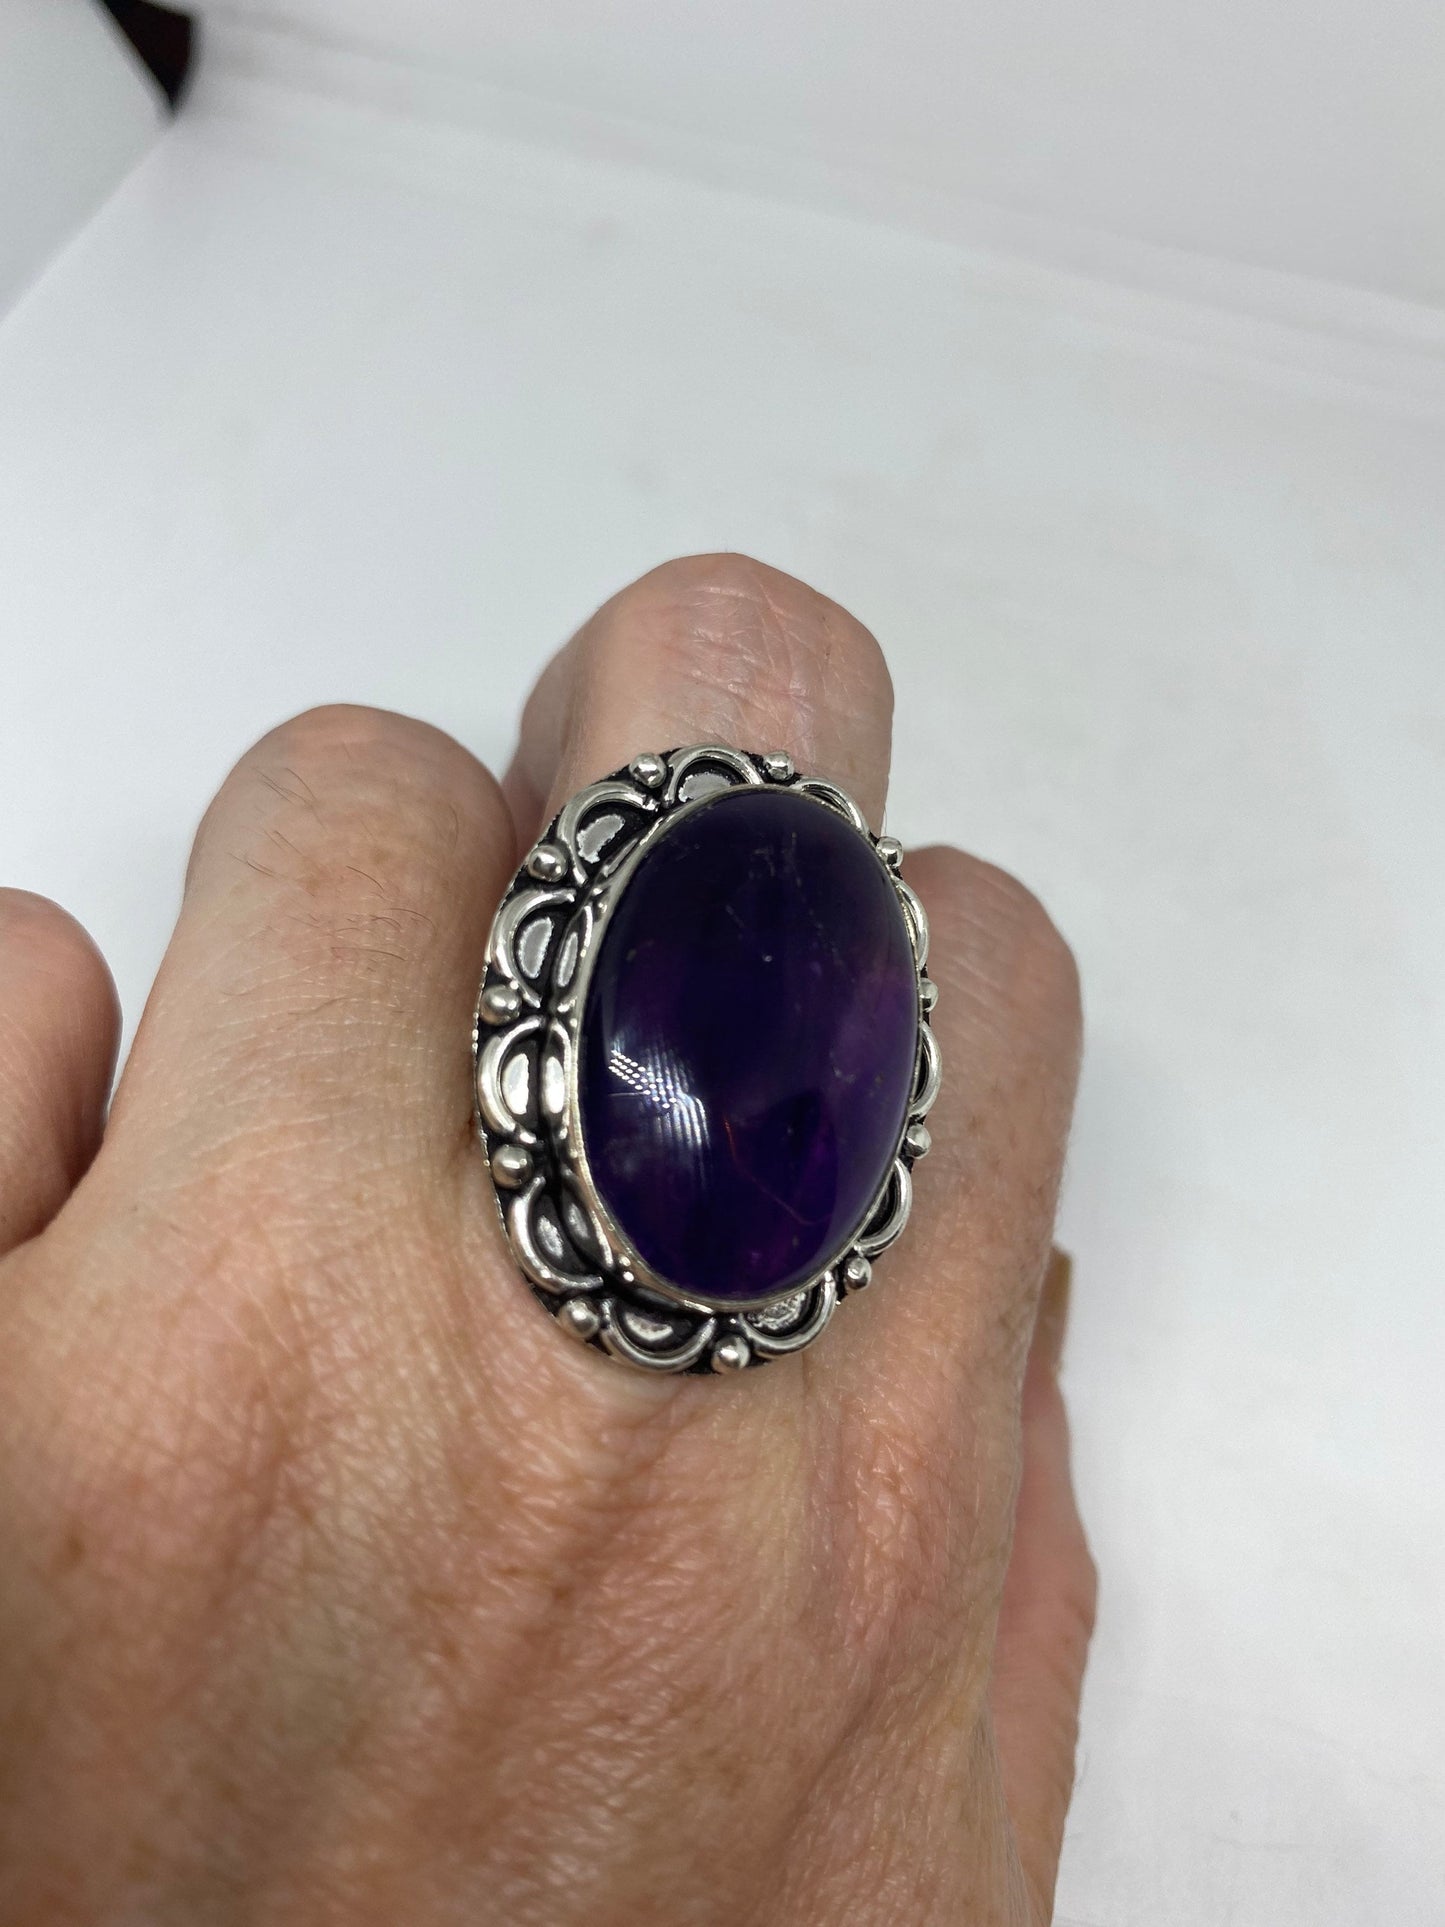 Vintage Genuine Amethyst Ring Size 6.5